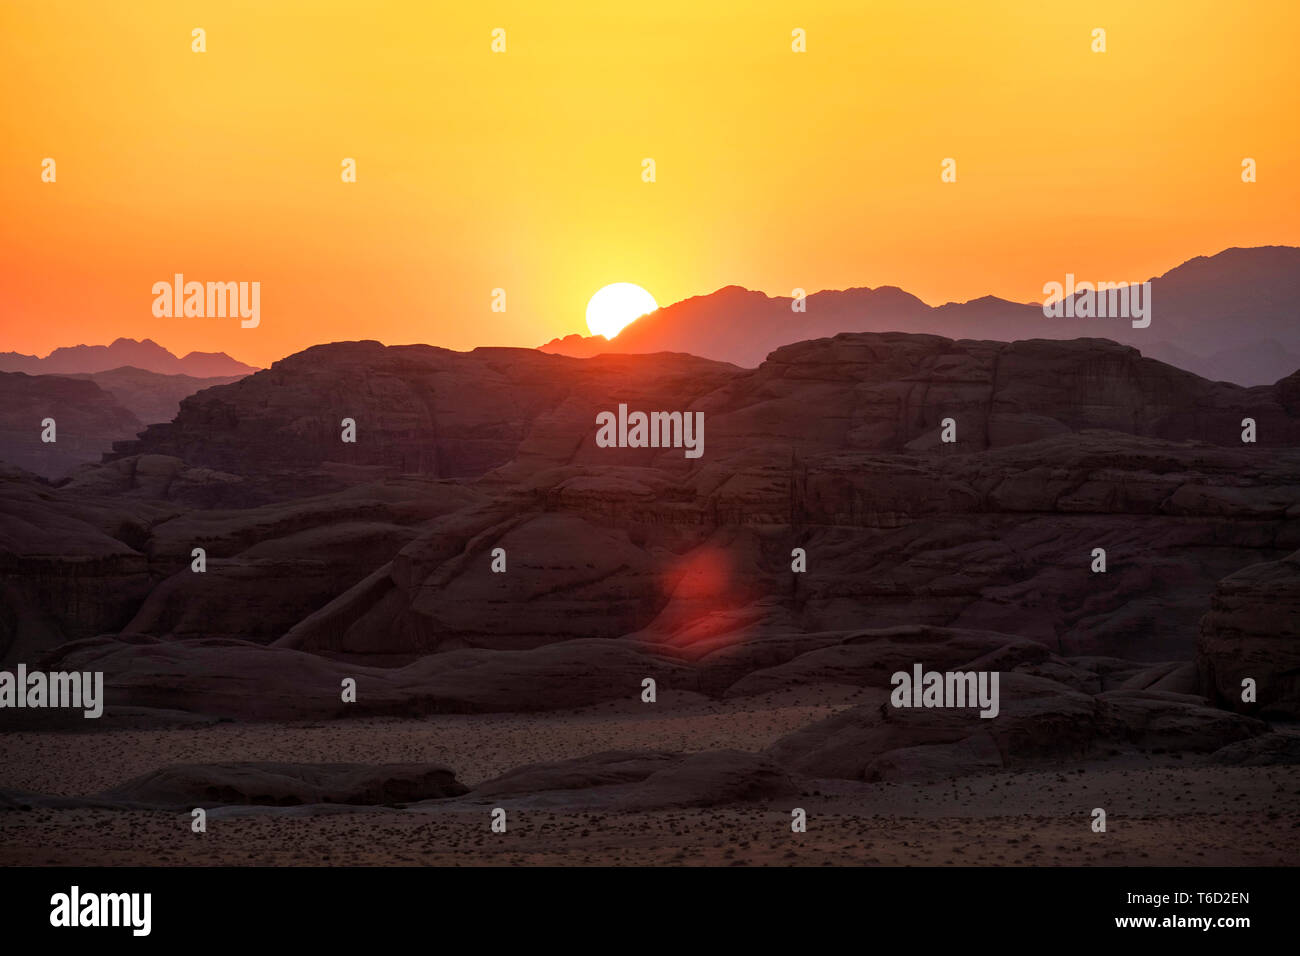 Jordan, Aqaba Governorate, Wadi Rum. Wadi Rum Protected Area, UNESCO World Heritage Site. Desert landscape at sunset. Stock Photo